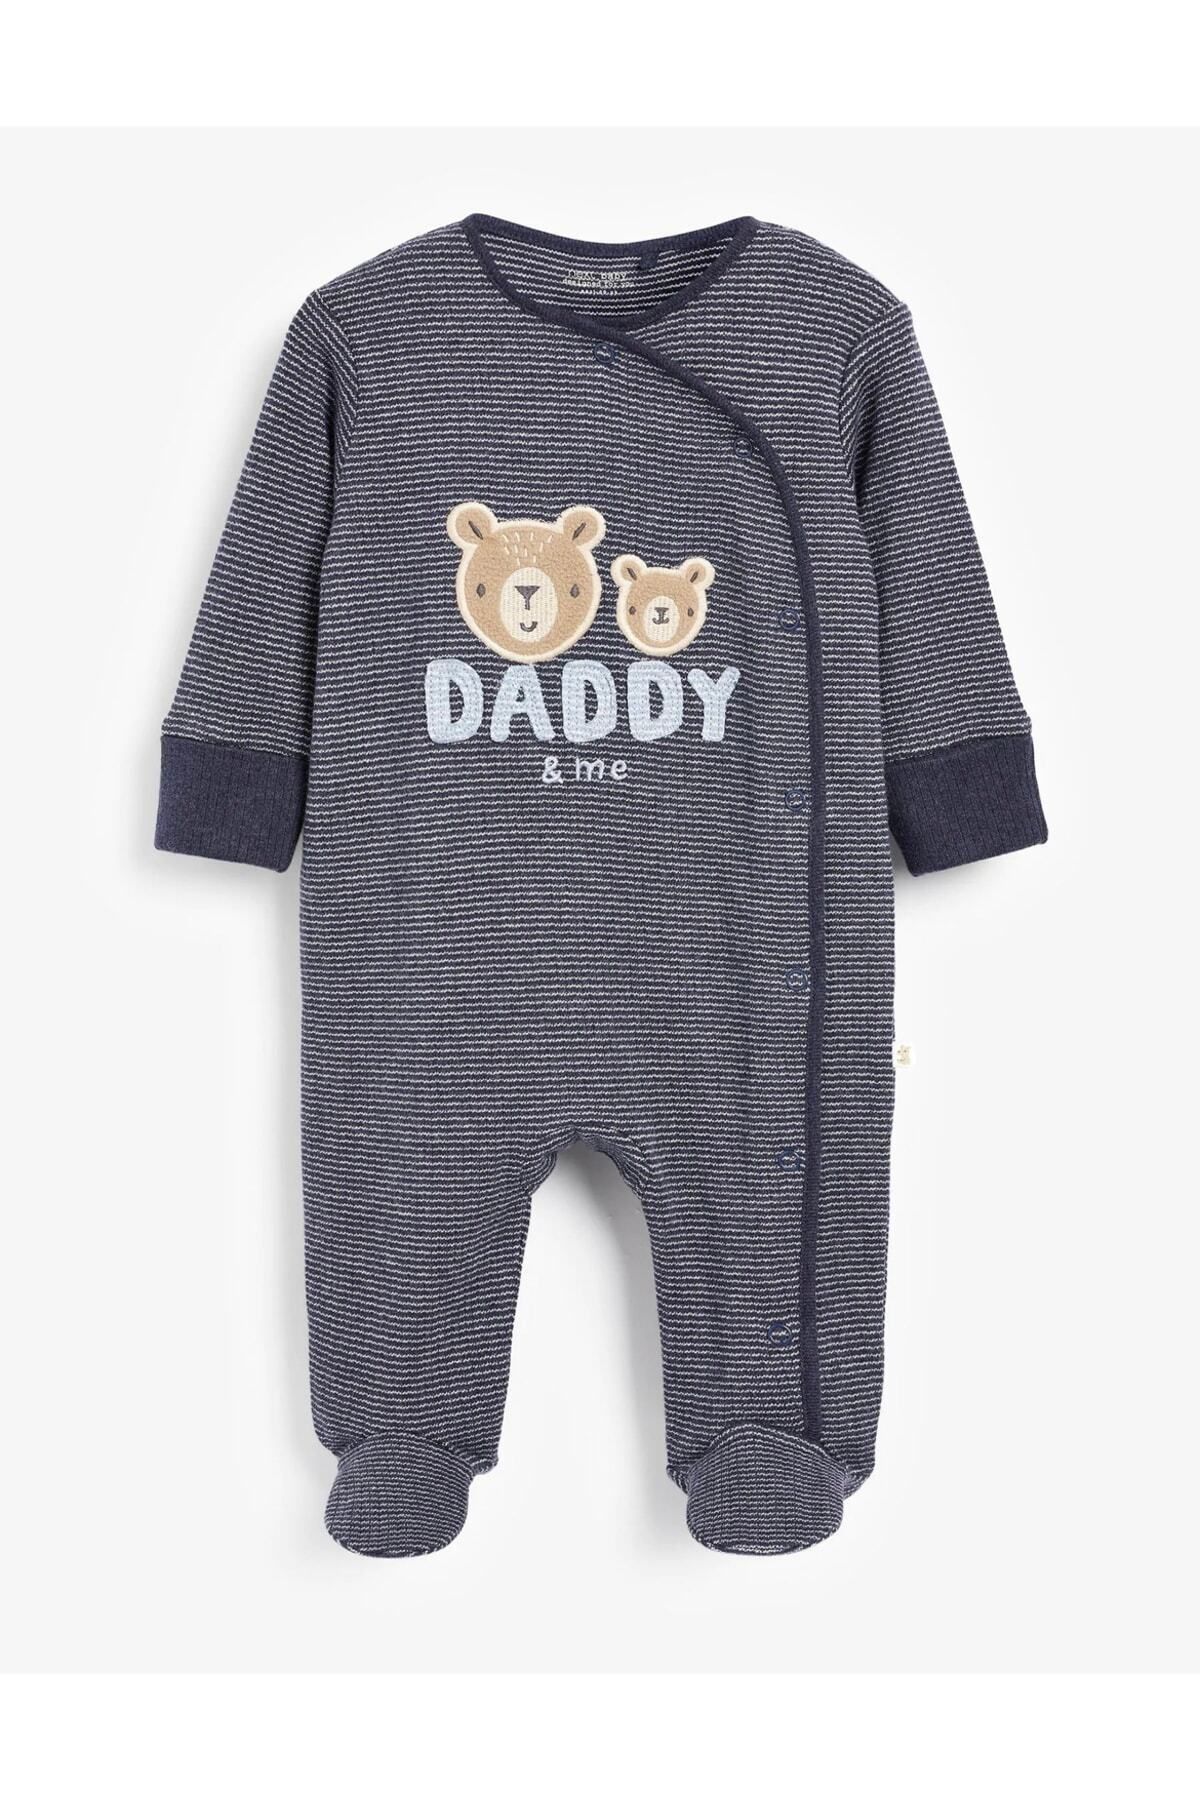 Next Baby Daddy Bear Tulum